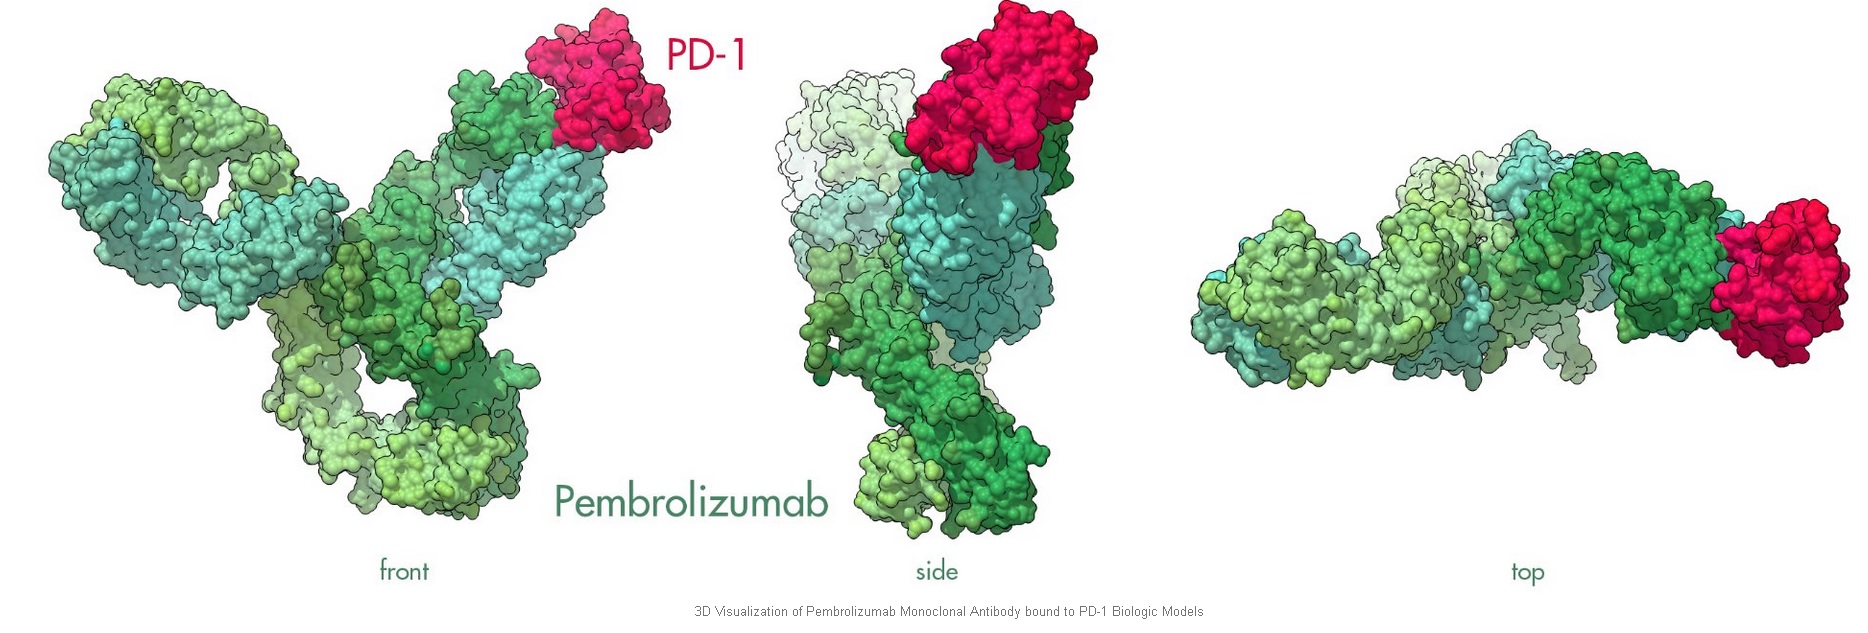 pembrolizmab molecular profile